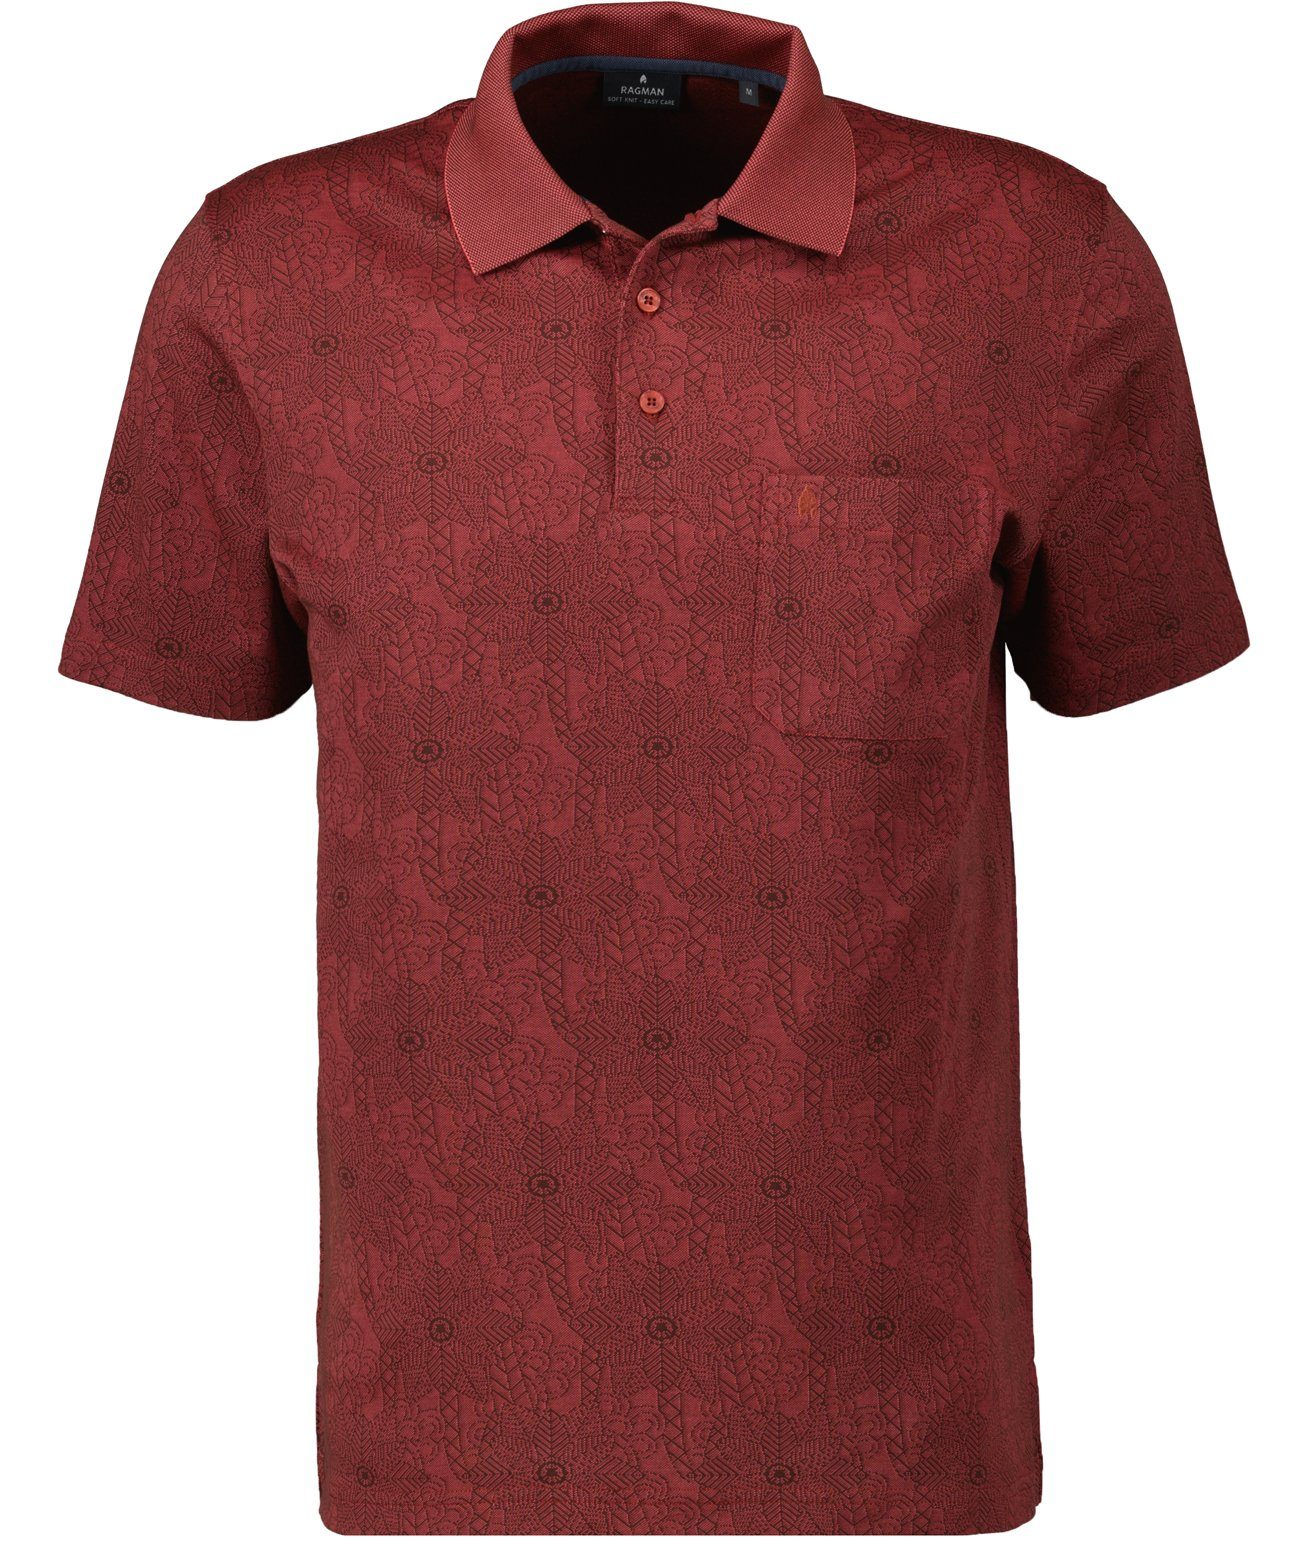 RAGMAN Poloshirt Softknit-Polo Jacquard mit Brusttasche koralle | Poloshirts